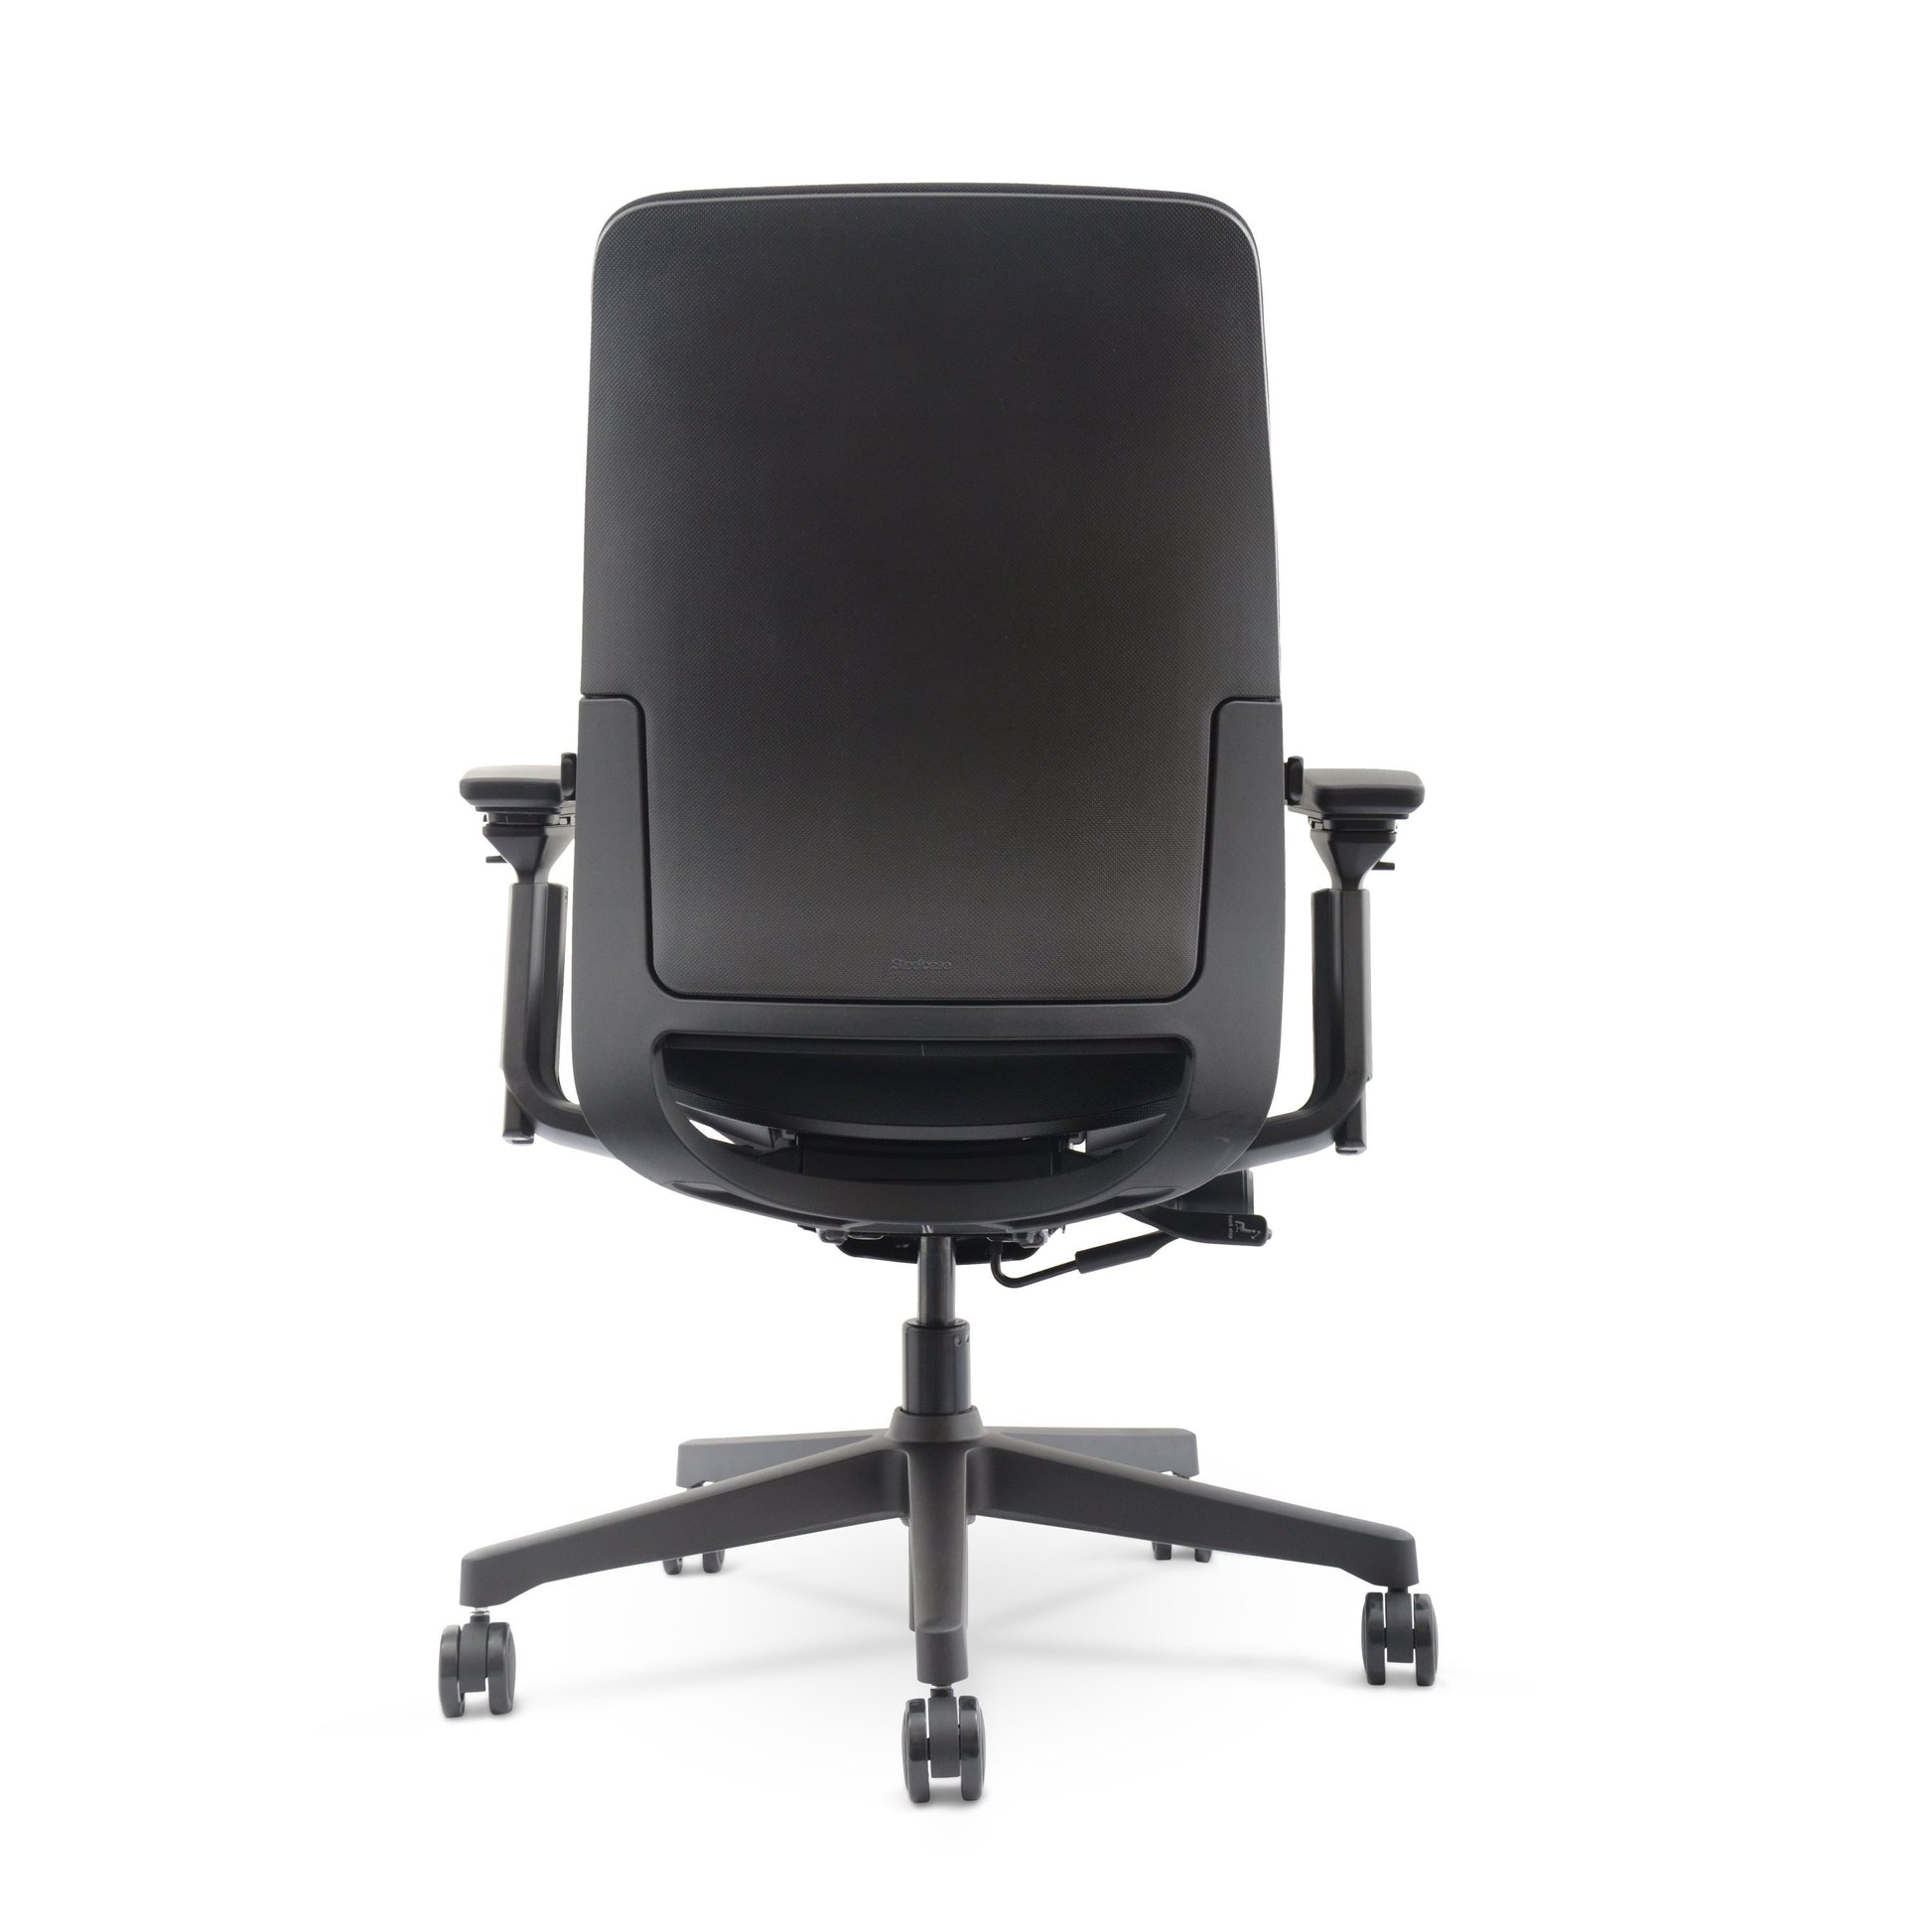 Black Renewed Amia Chair chairorama.com